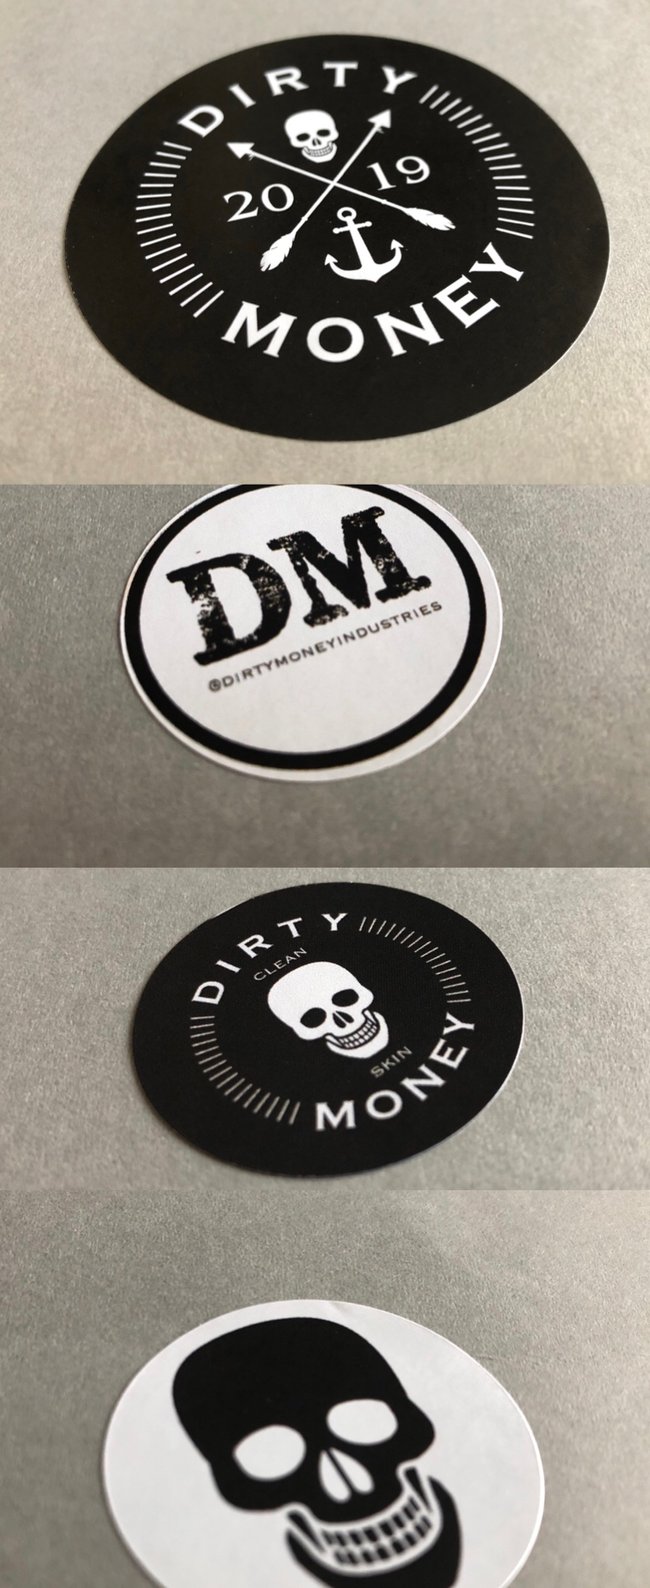 dirty money sticker